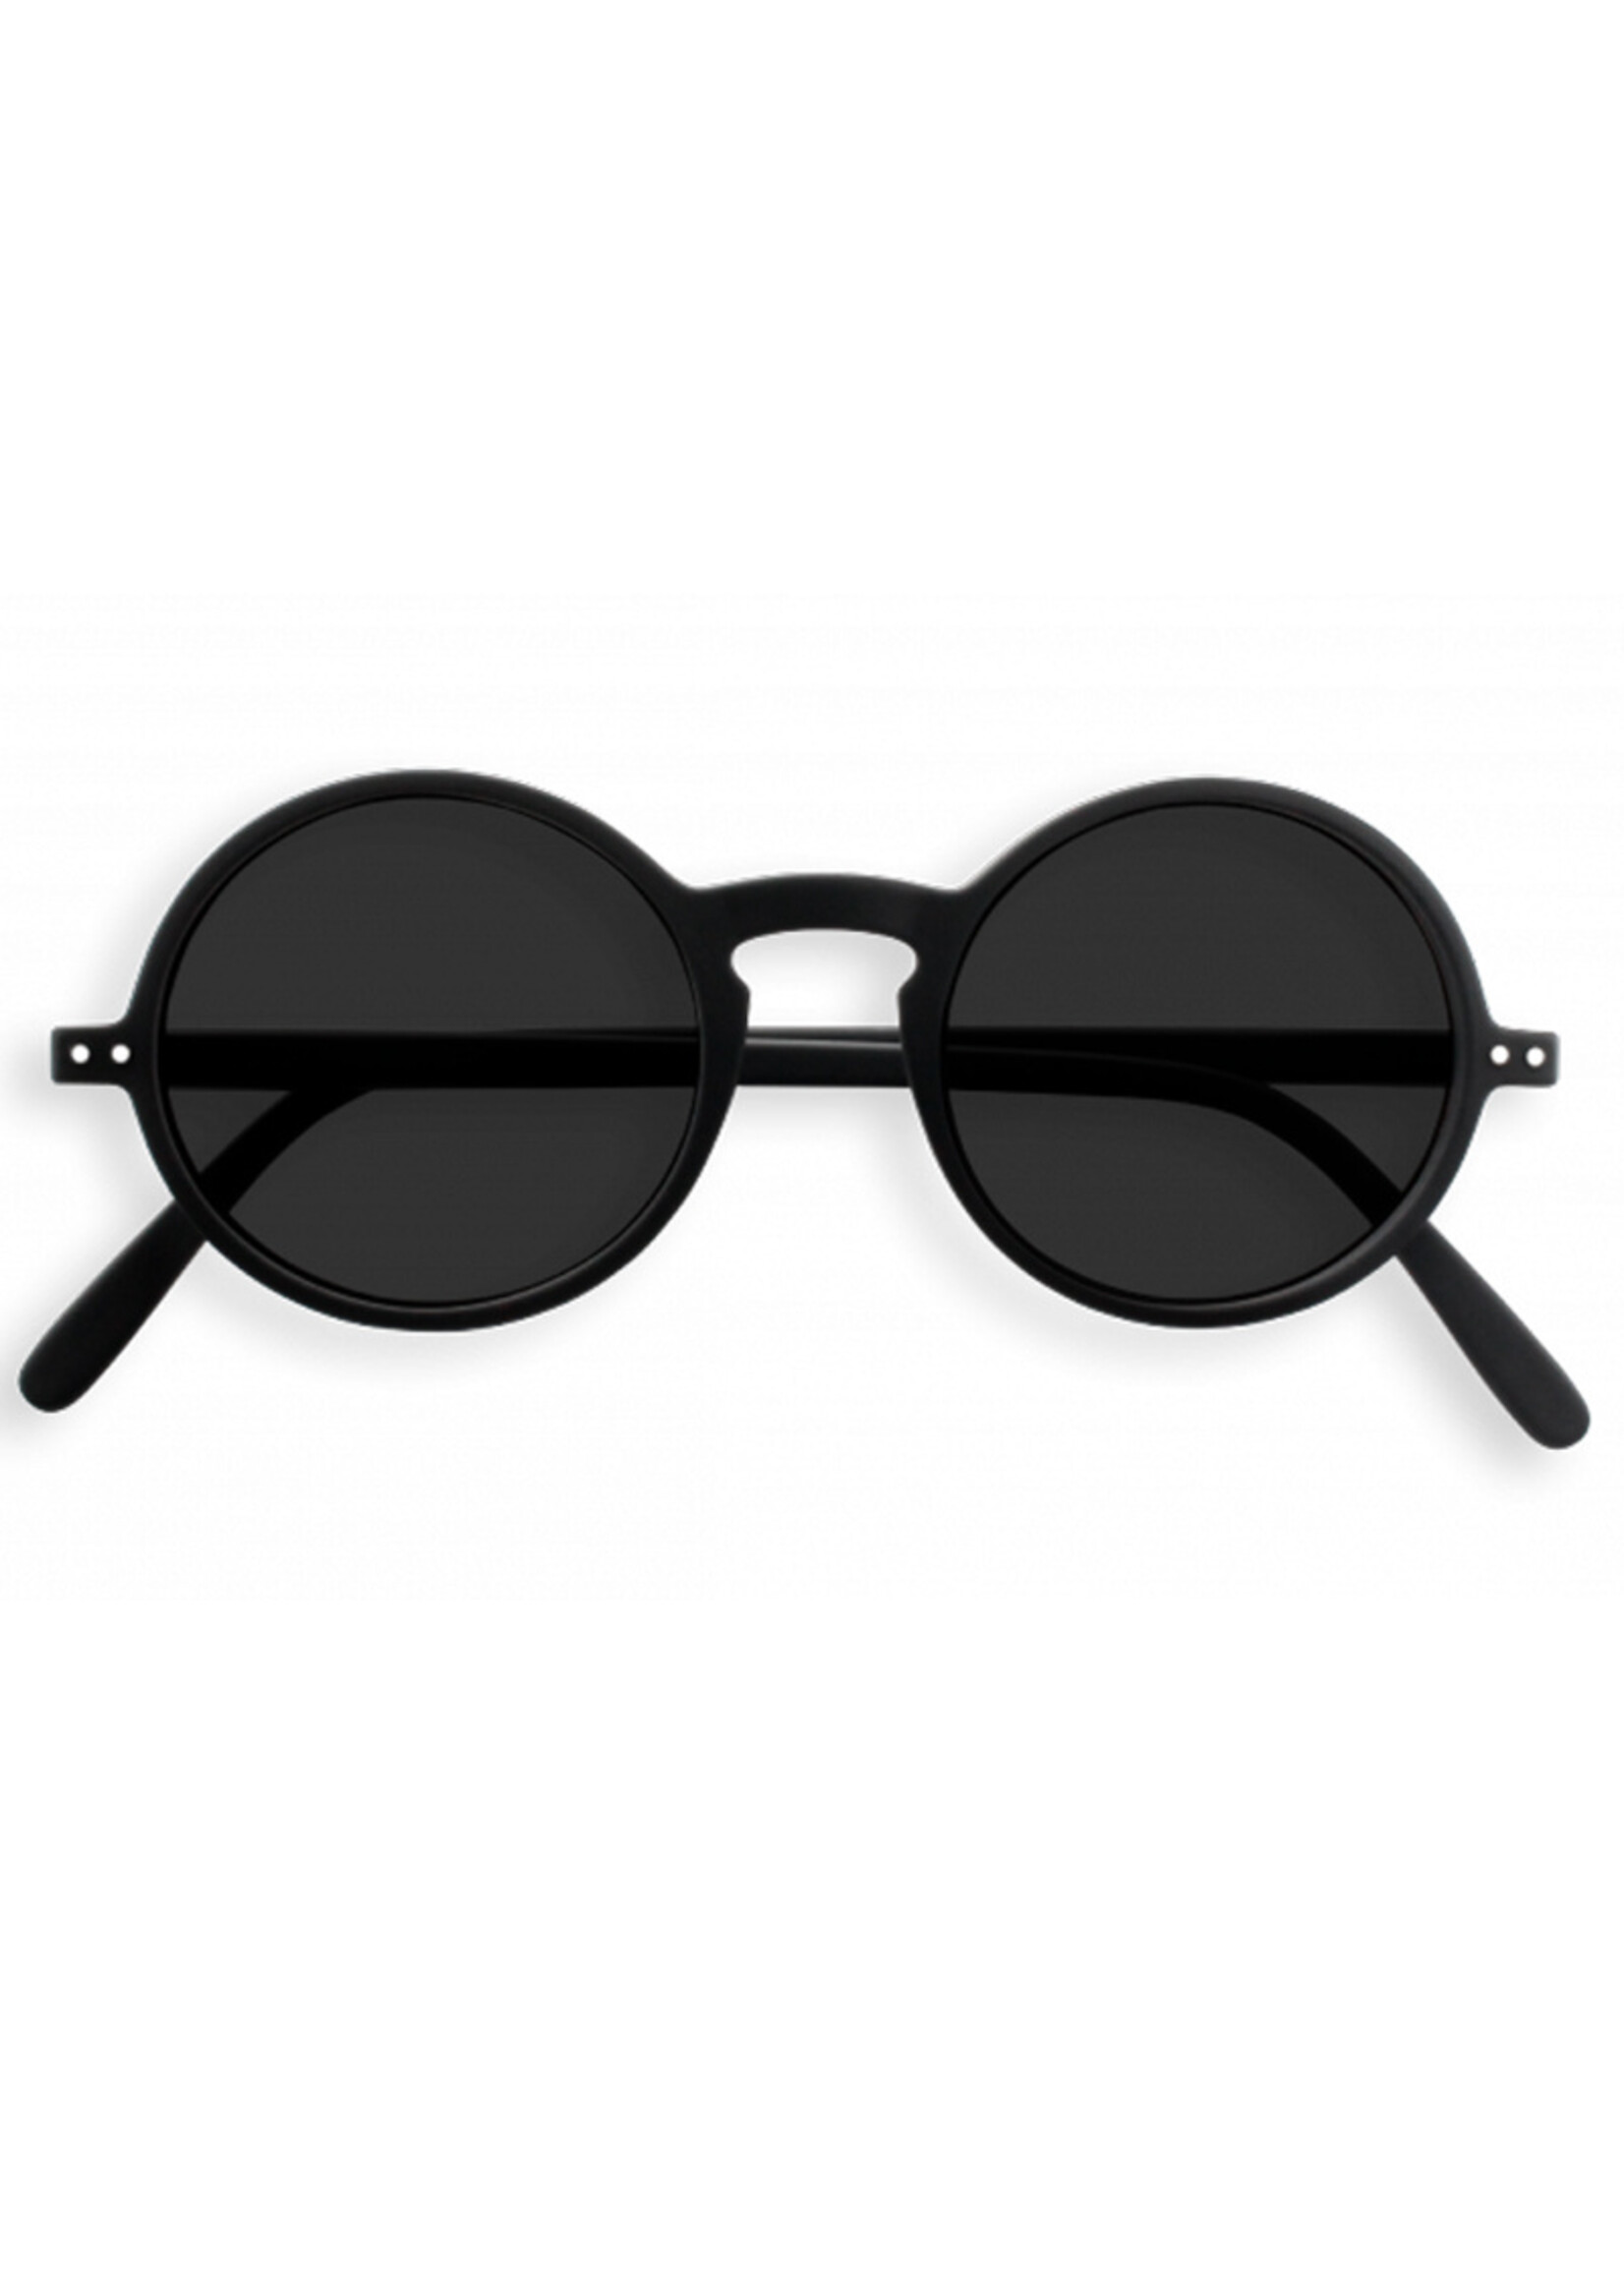 Izipizi Sunglasses #G Black +0